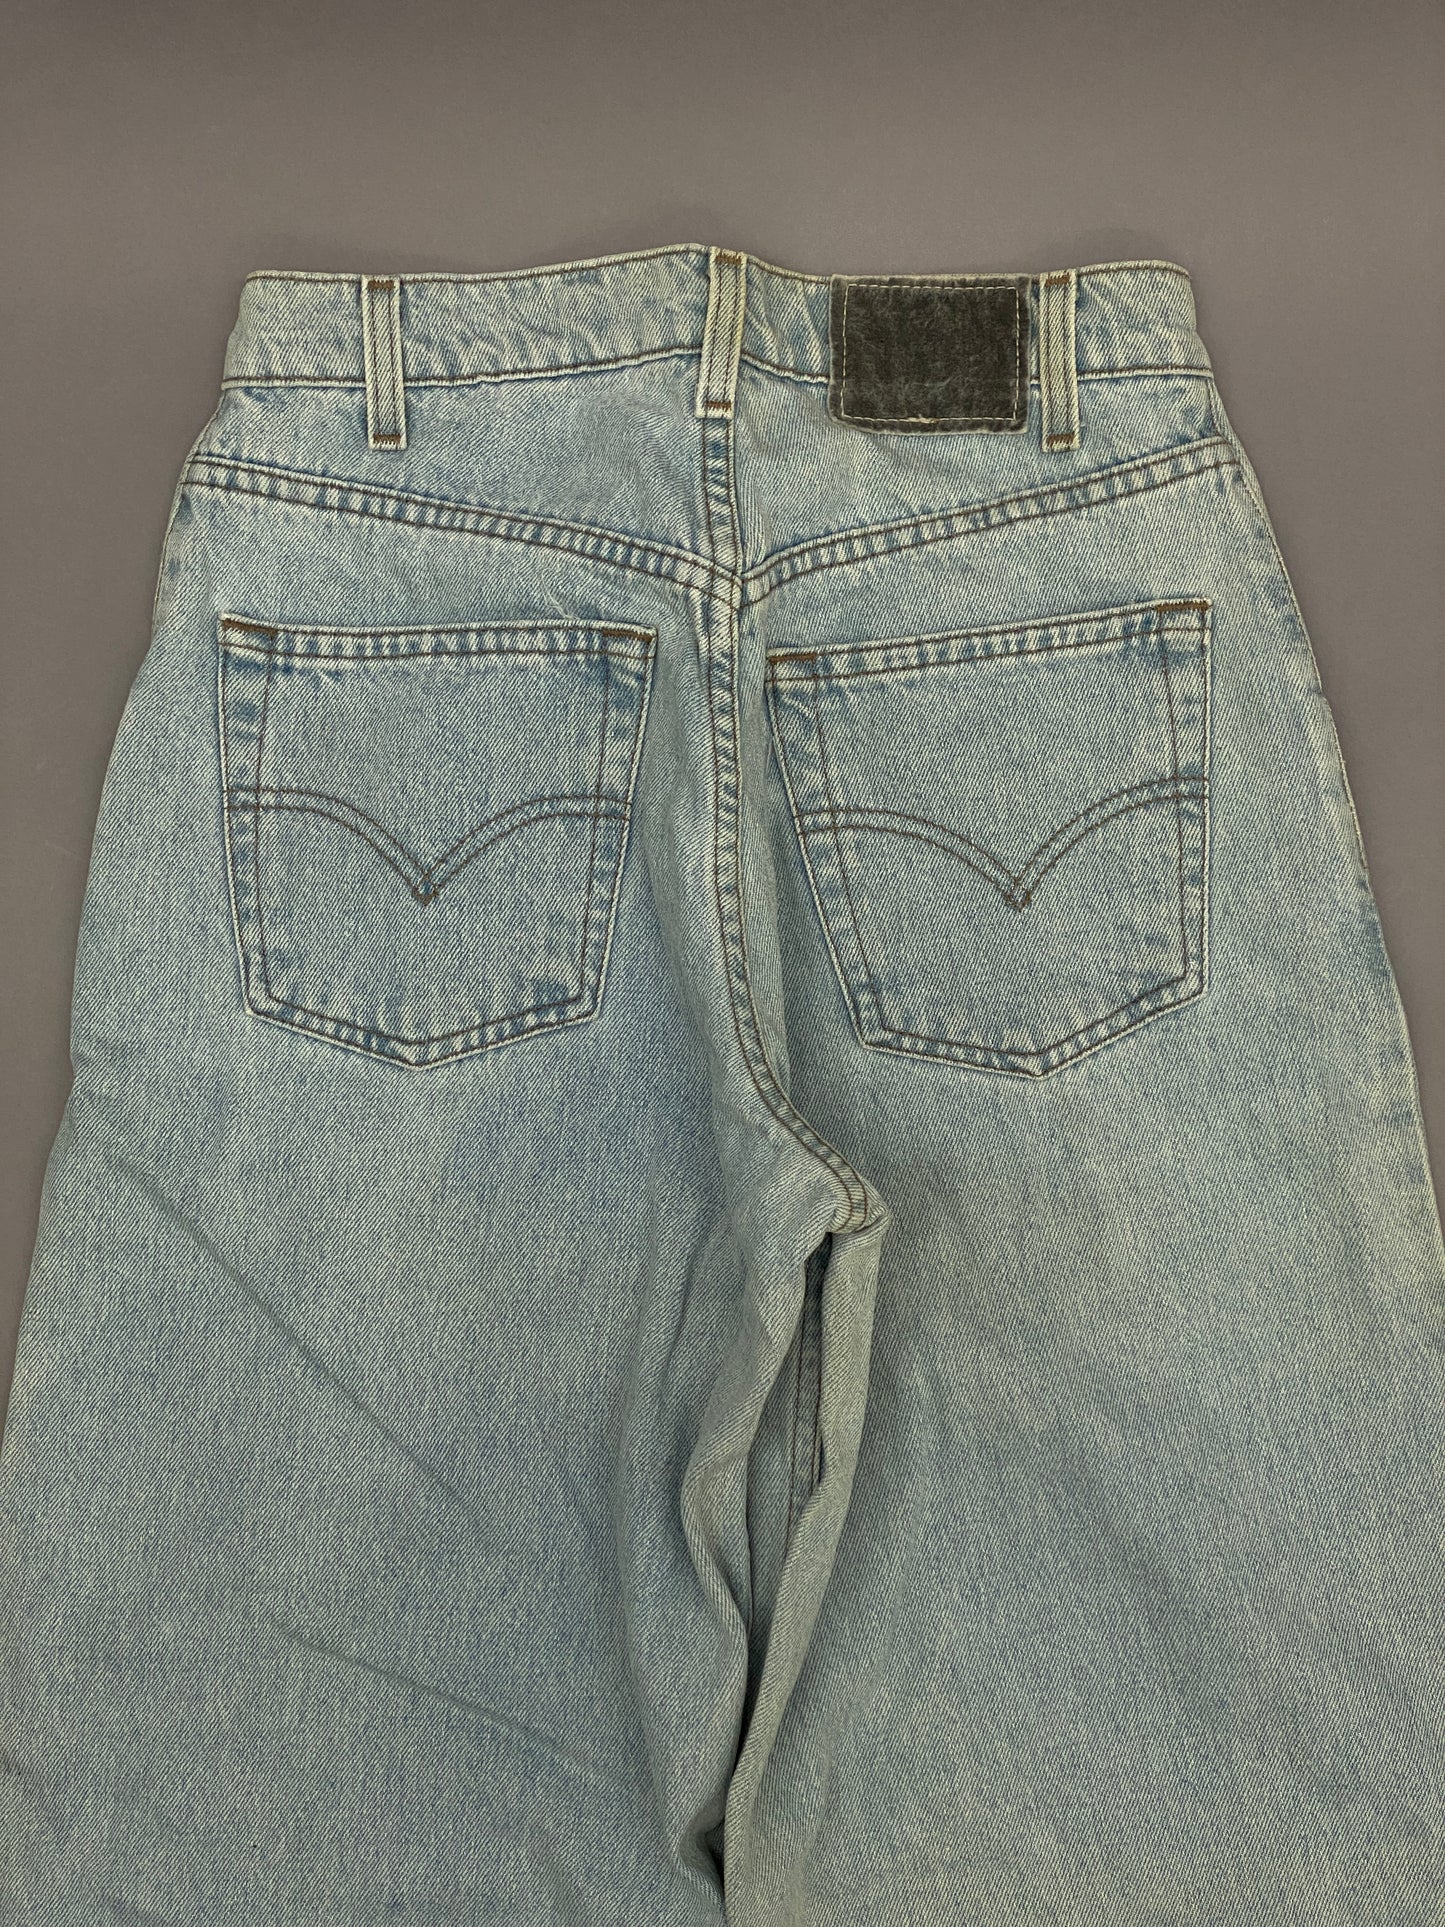 Levis Silvertab Vintage Baggy Jeans - 28 x 32